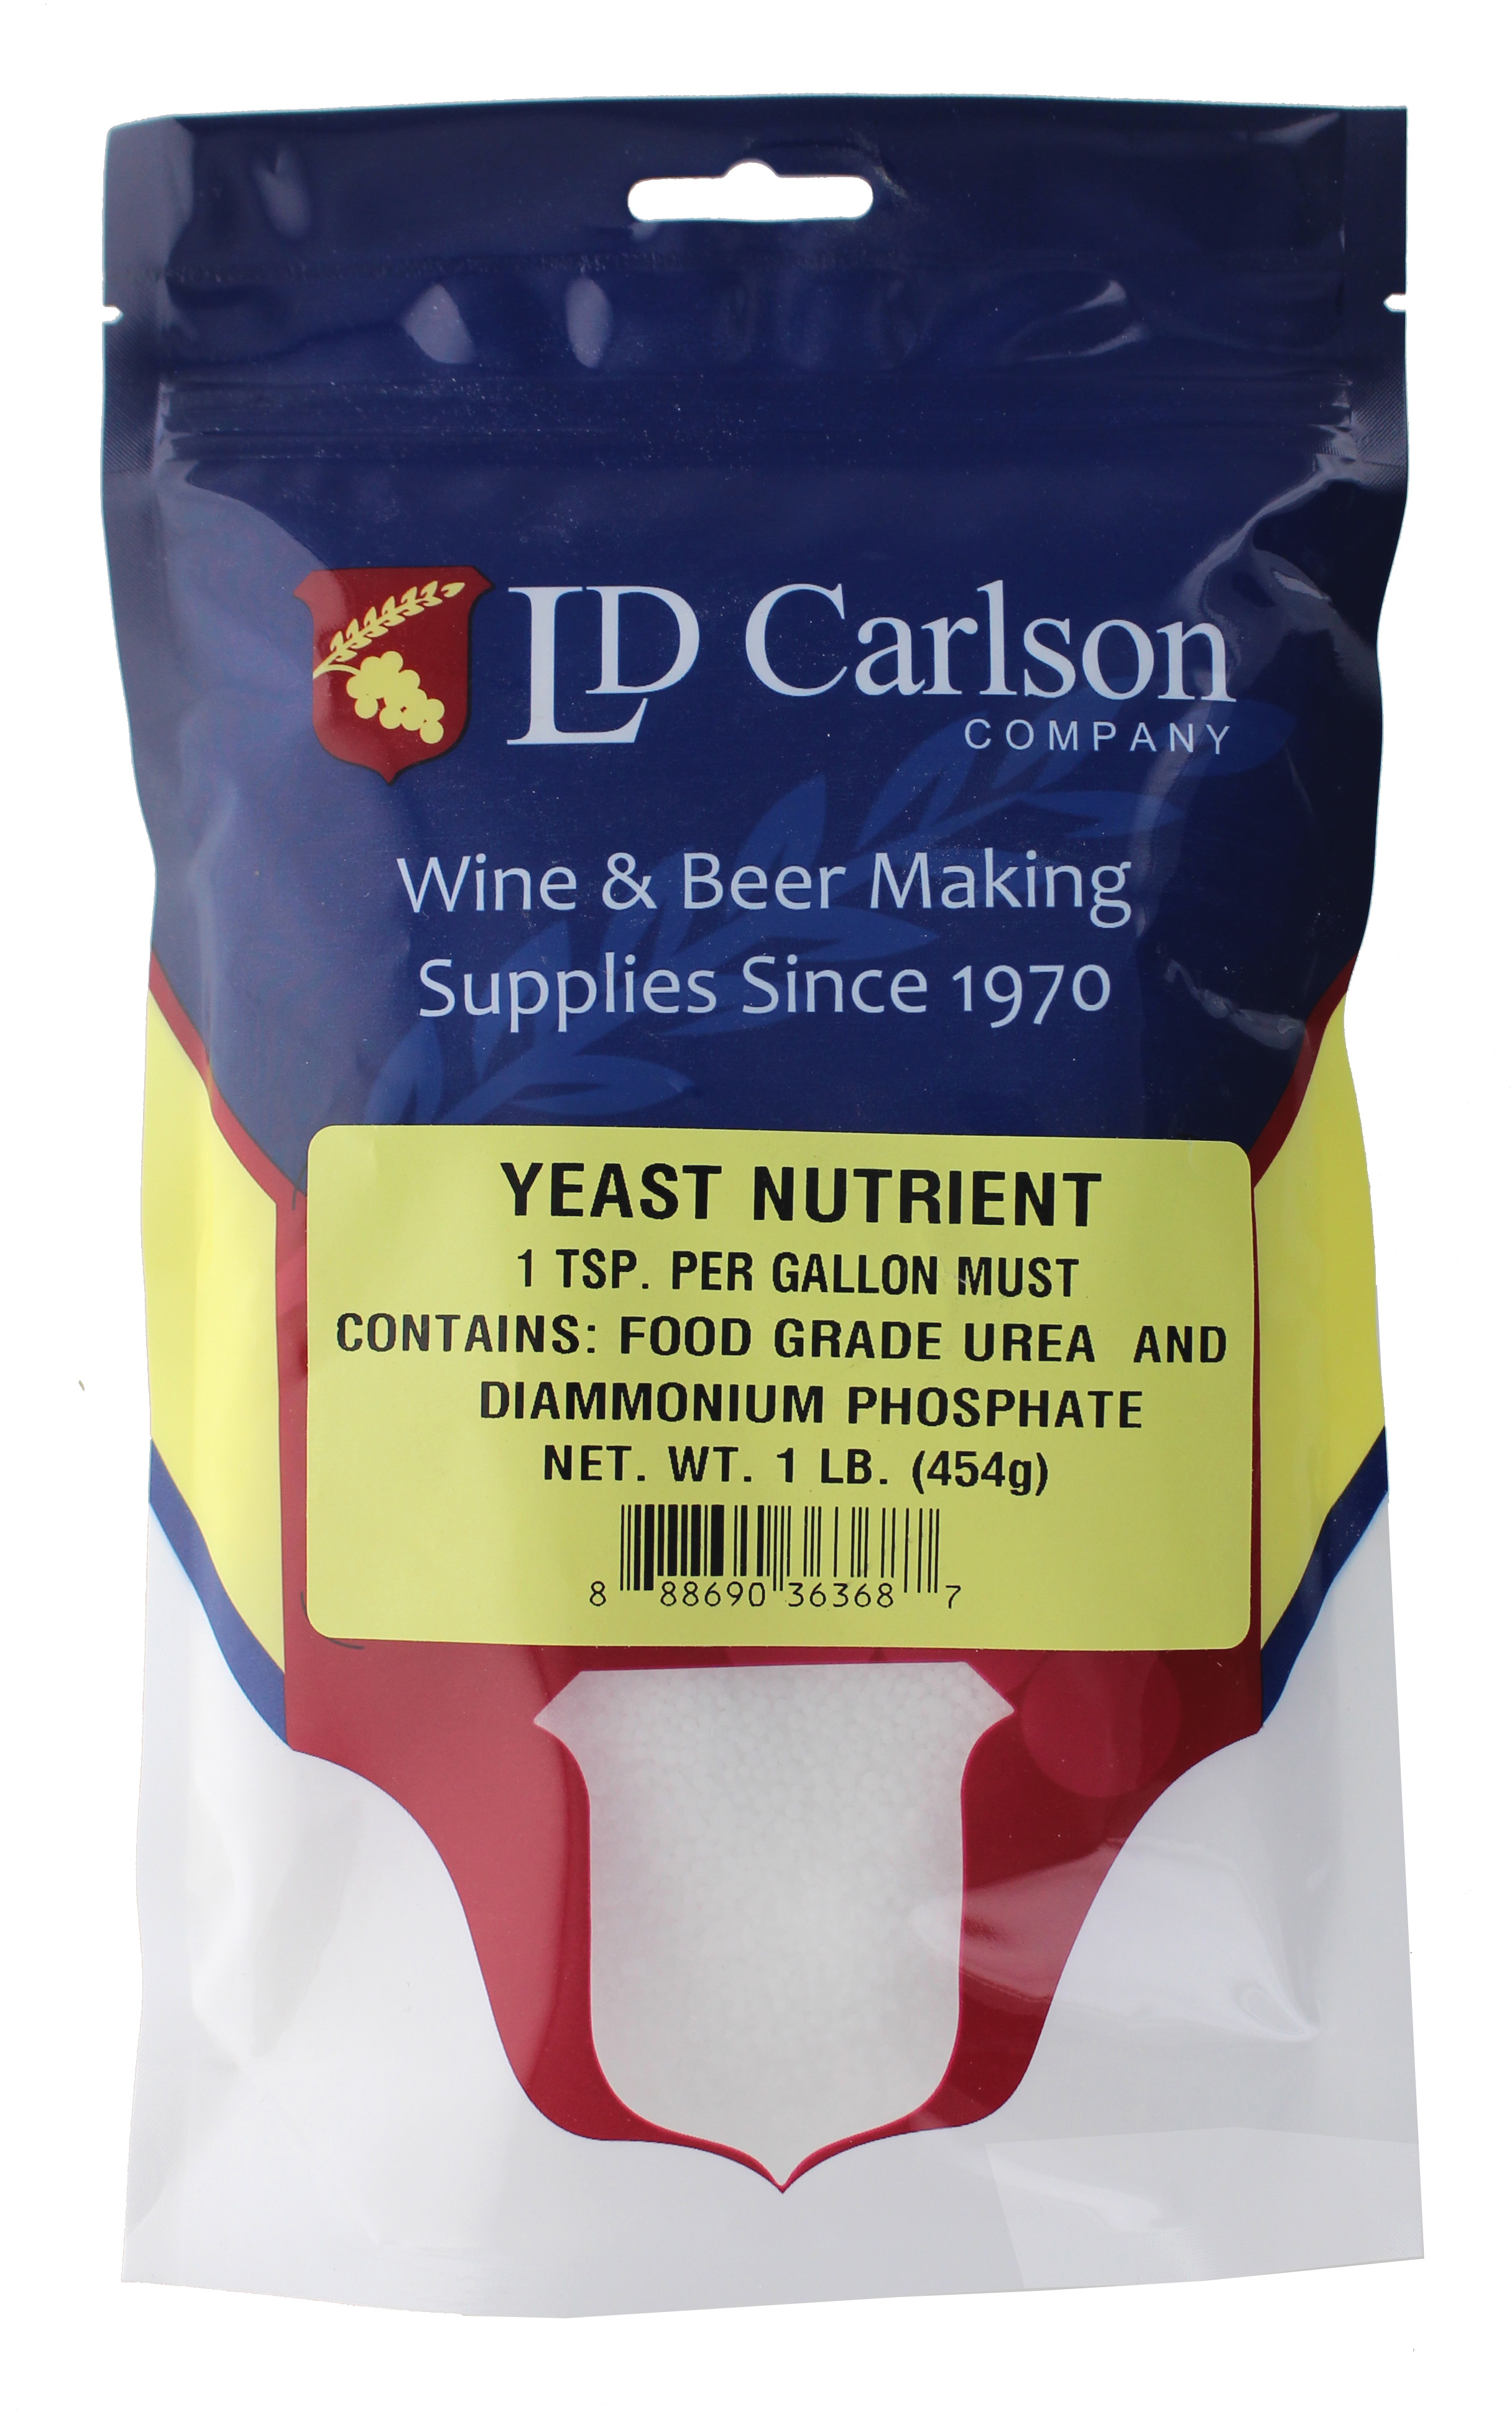 LD Carlson Yeast Nutrient 1 lb.